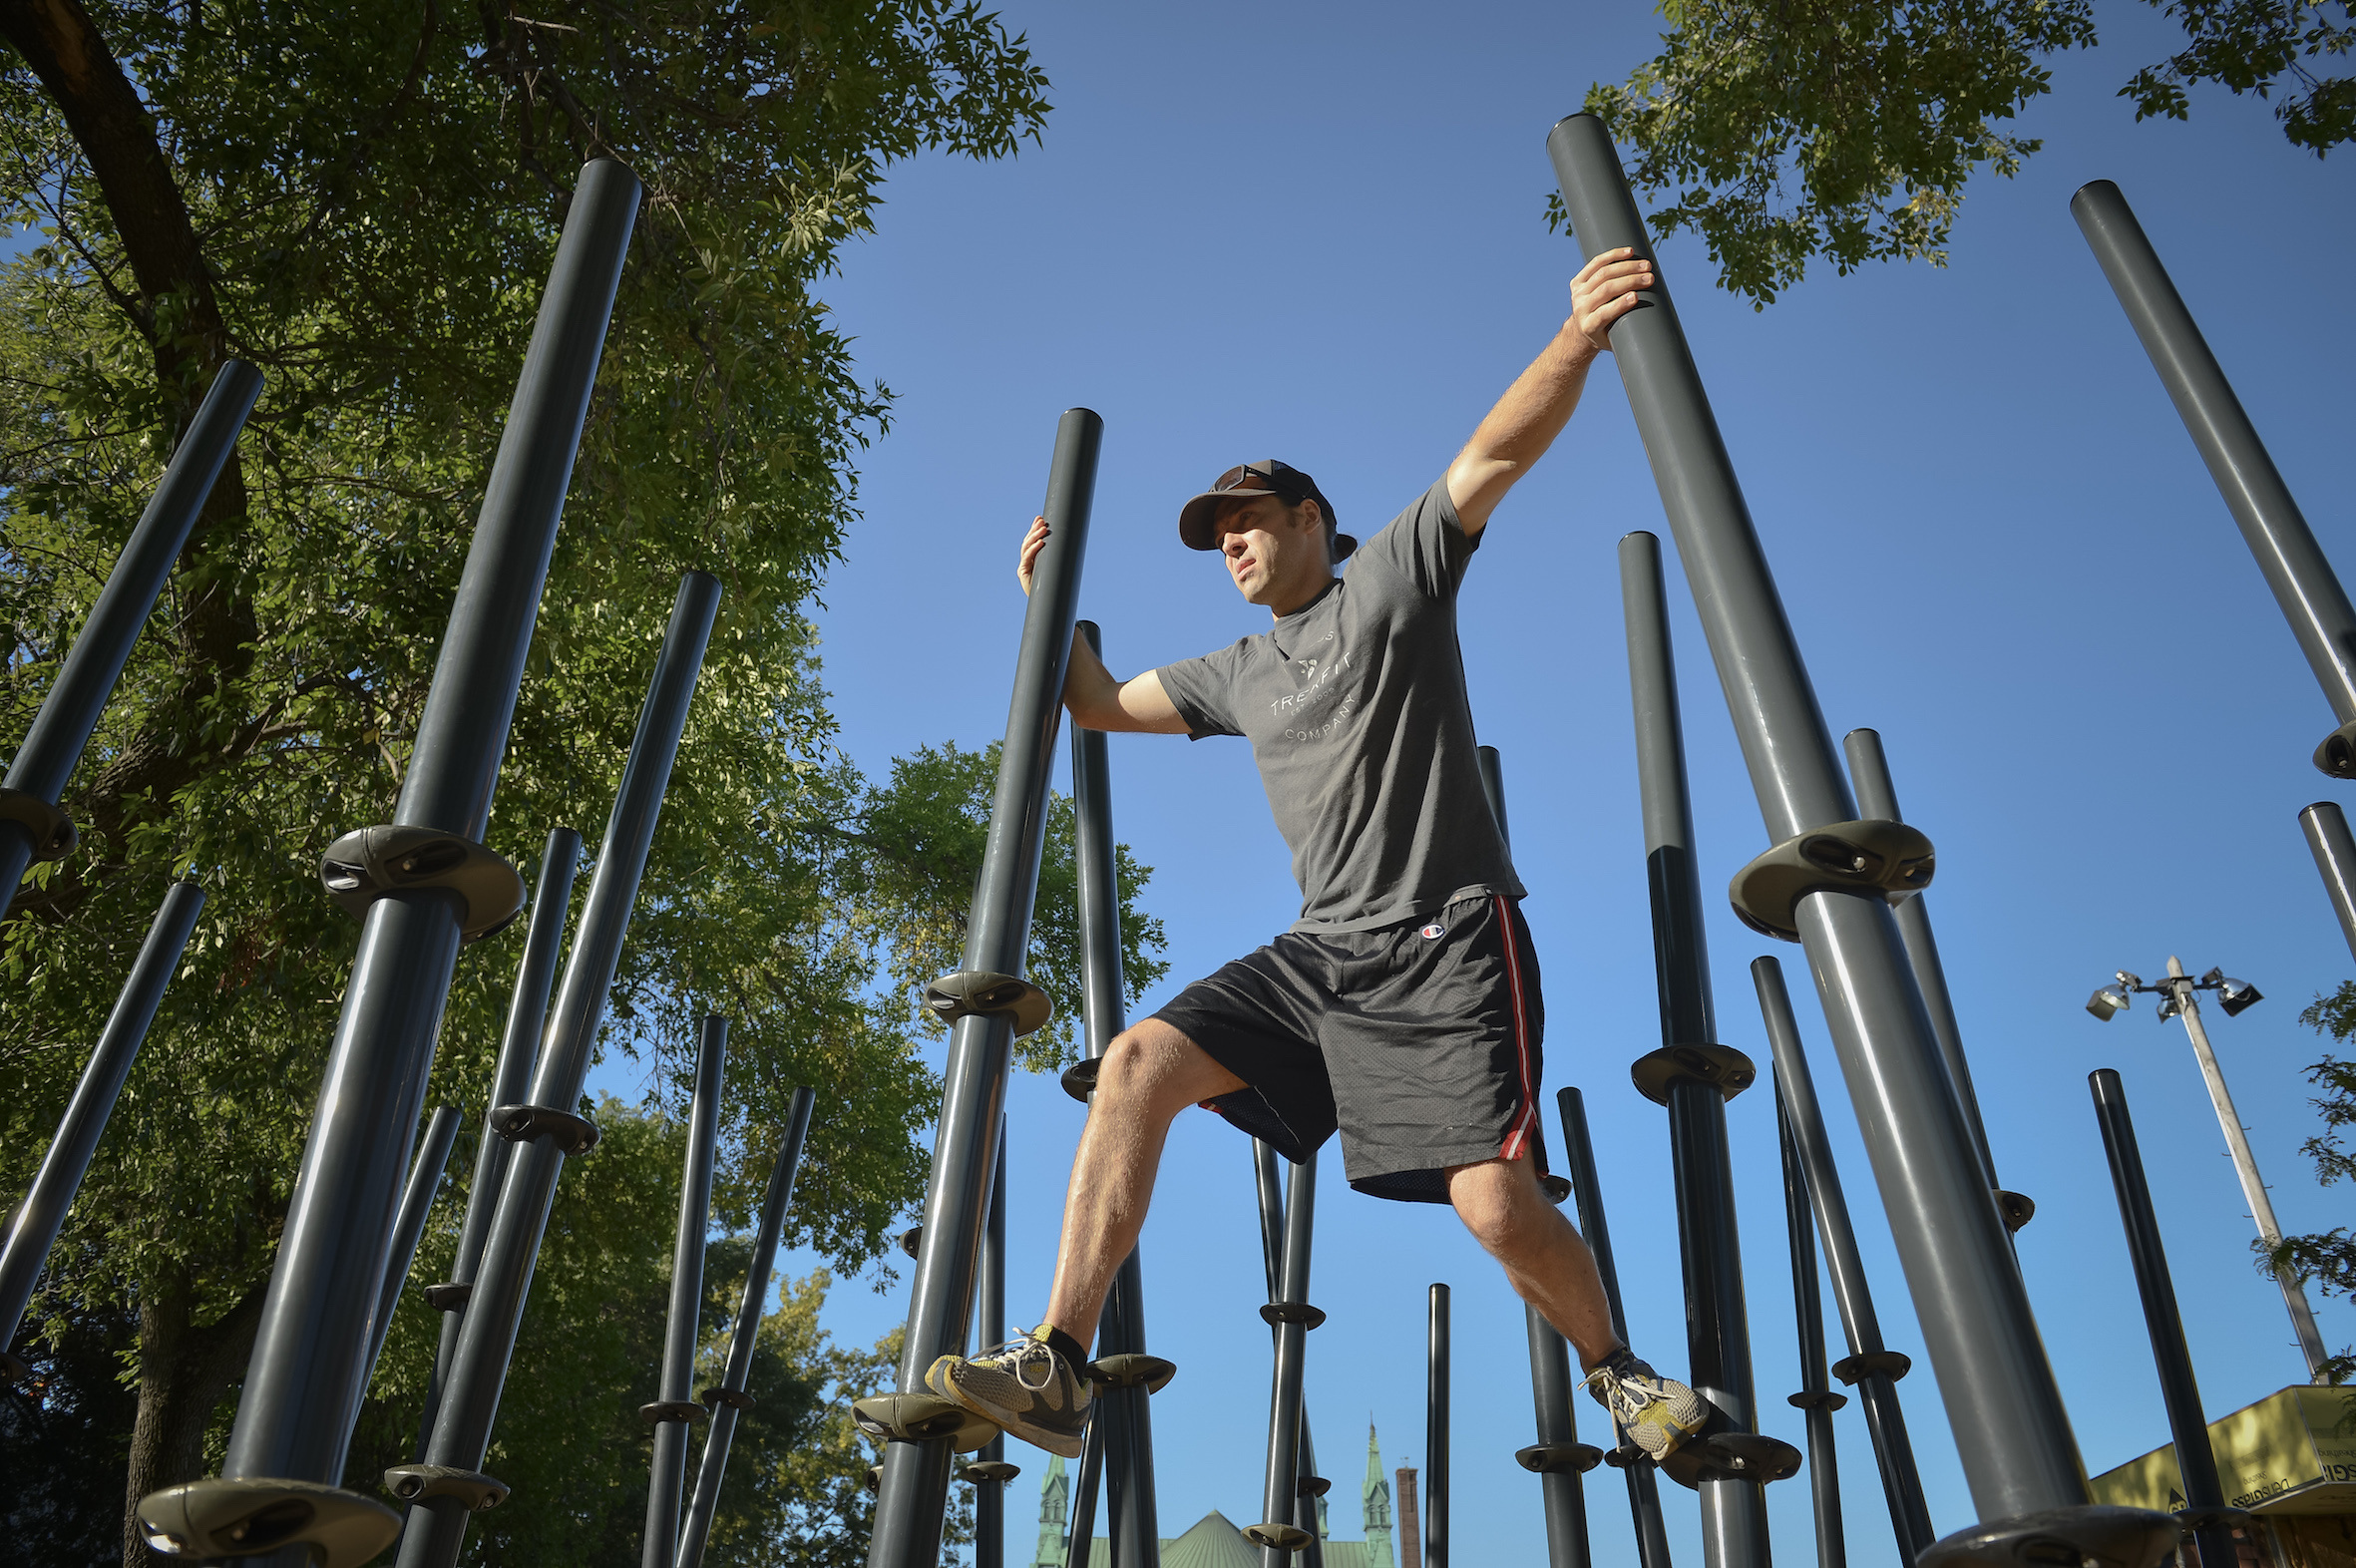 Outdoor fitness equipment for Calgary parks | Trekfit